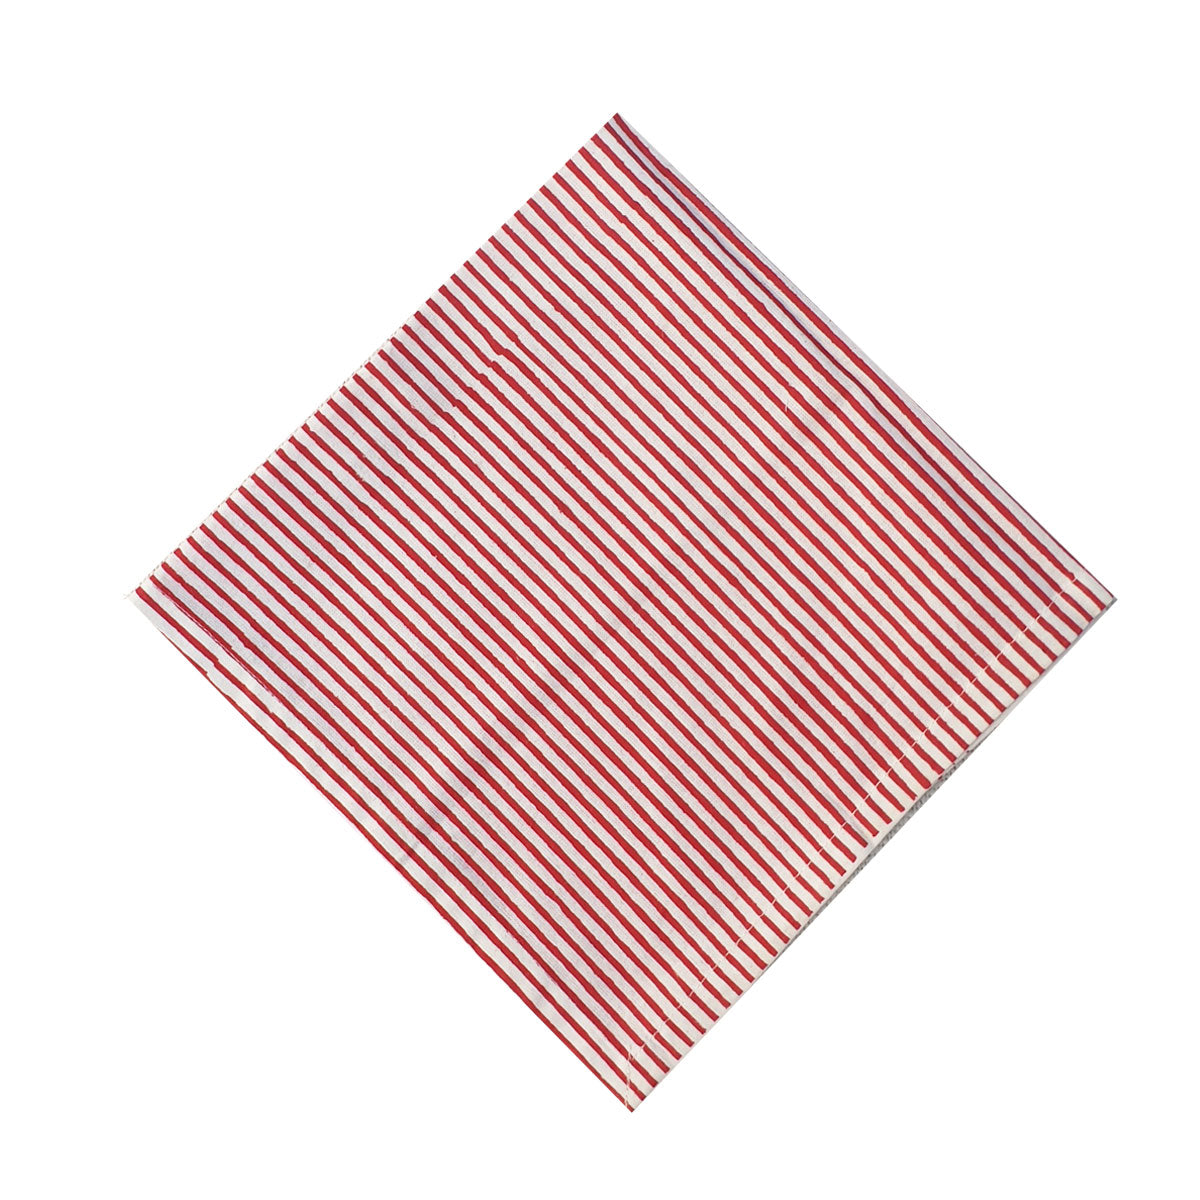 SCARLET Striped Blockprint Napkins